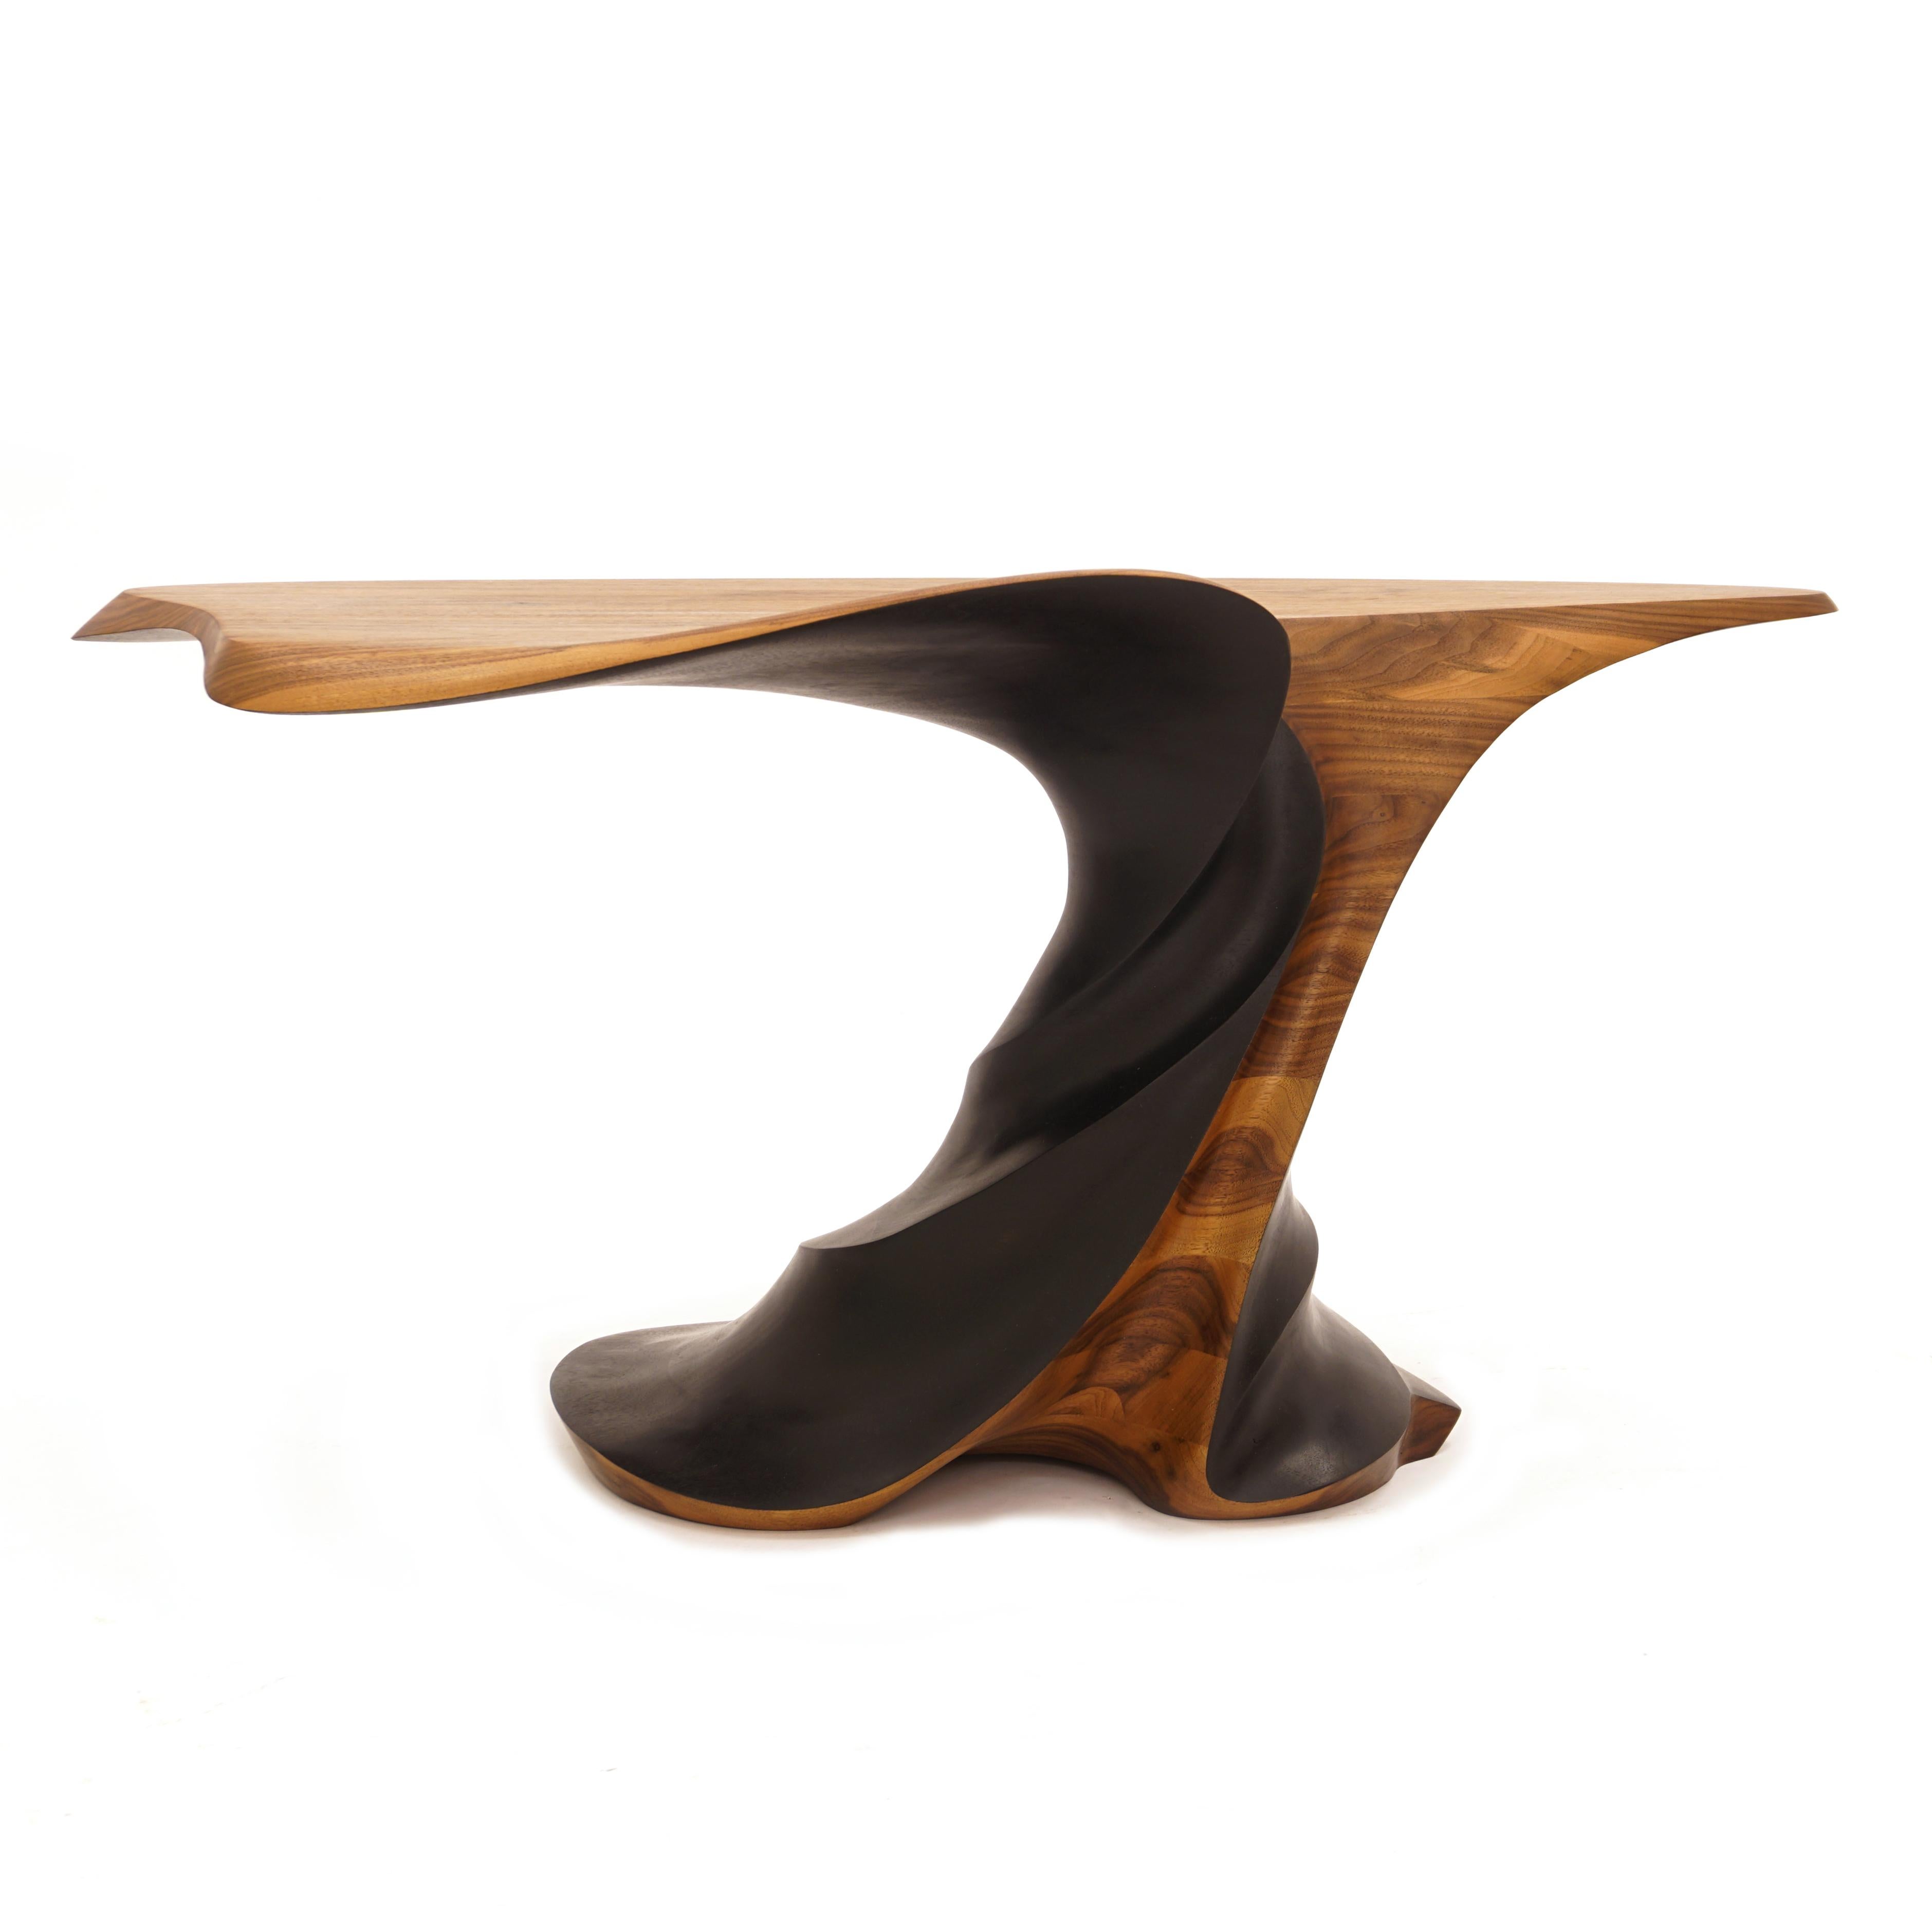 Danish modern walnut sofa table designed, made and signed by Morten Stenbæk
Signed
Measures: H: 48cm. Top: 48 x 106cm.